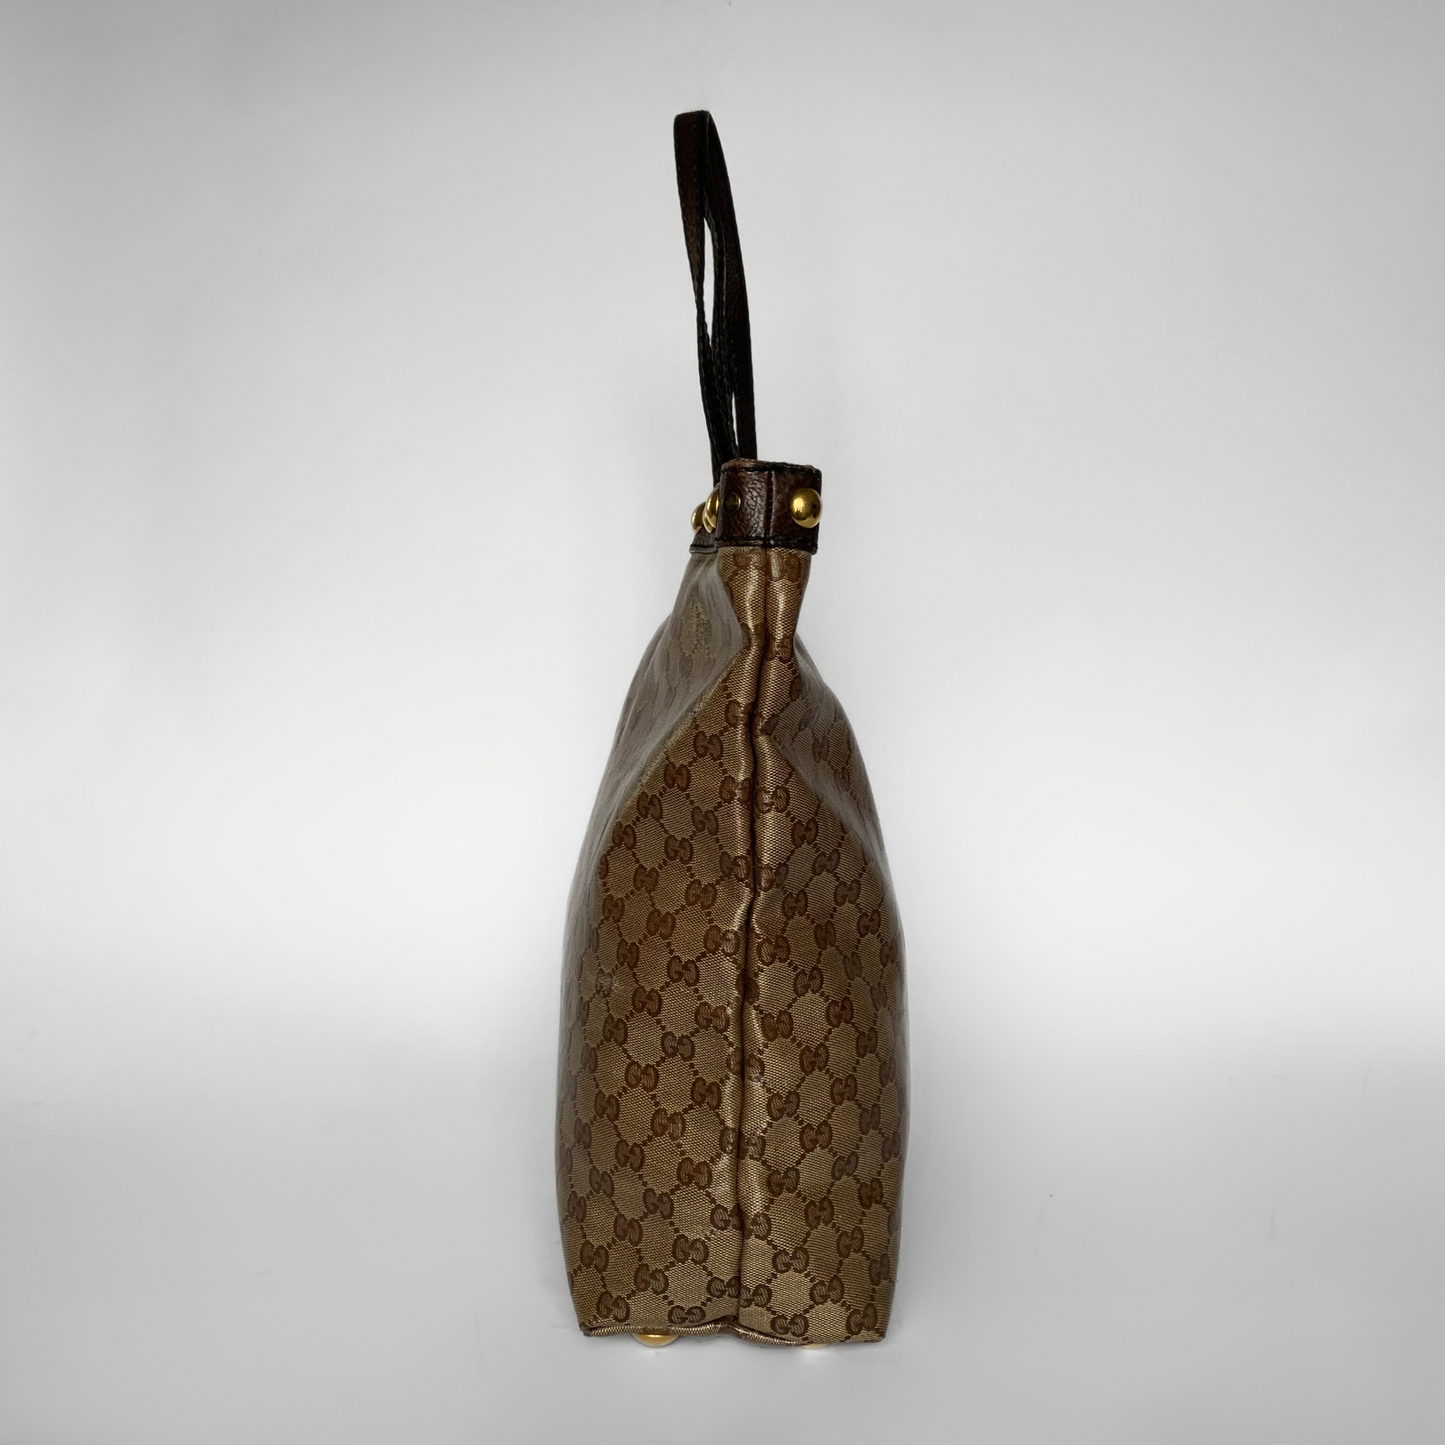 Gucci Gucci Babouska Crystal Tote Bag PVC - Håndtasker - Etoile Luxury Vintage